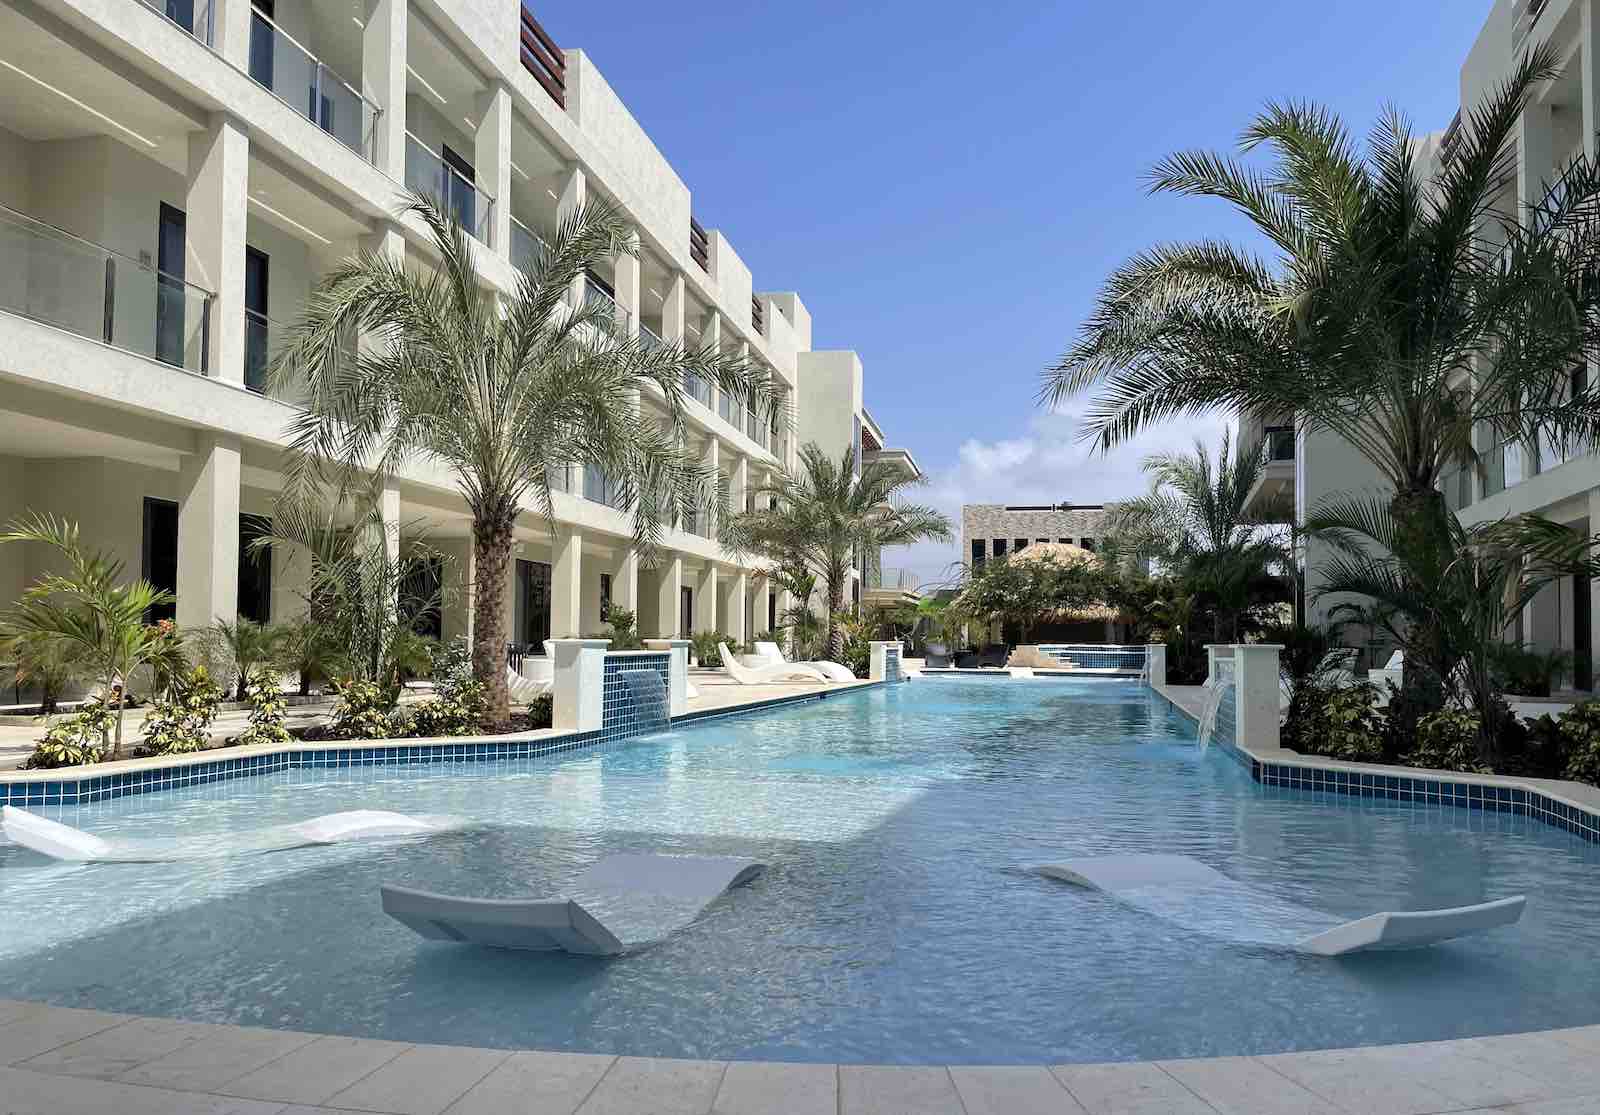 Wariruri apartments Aruba • Best place for your Aruba vacation!